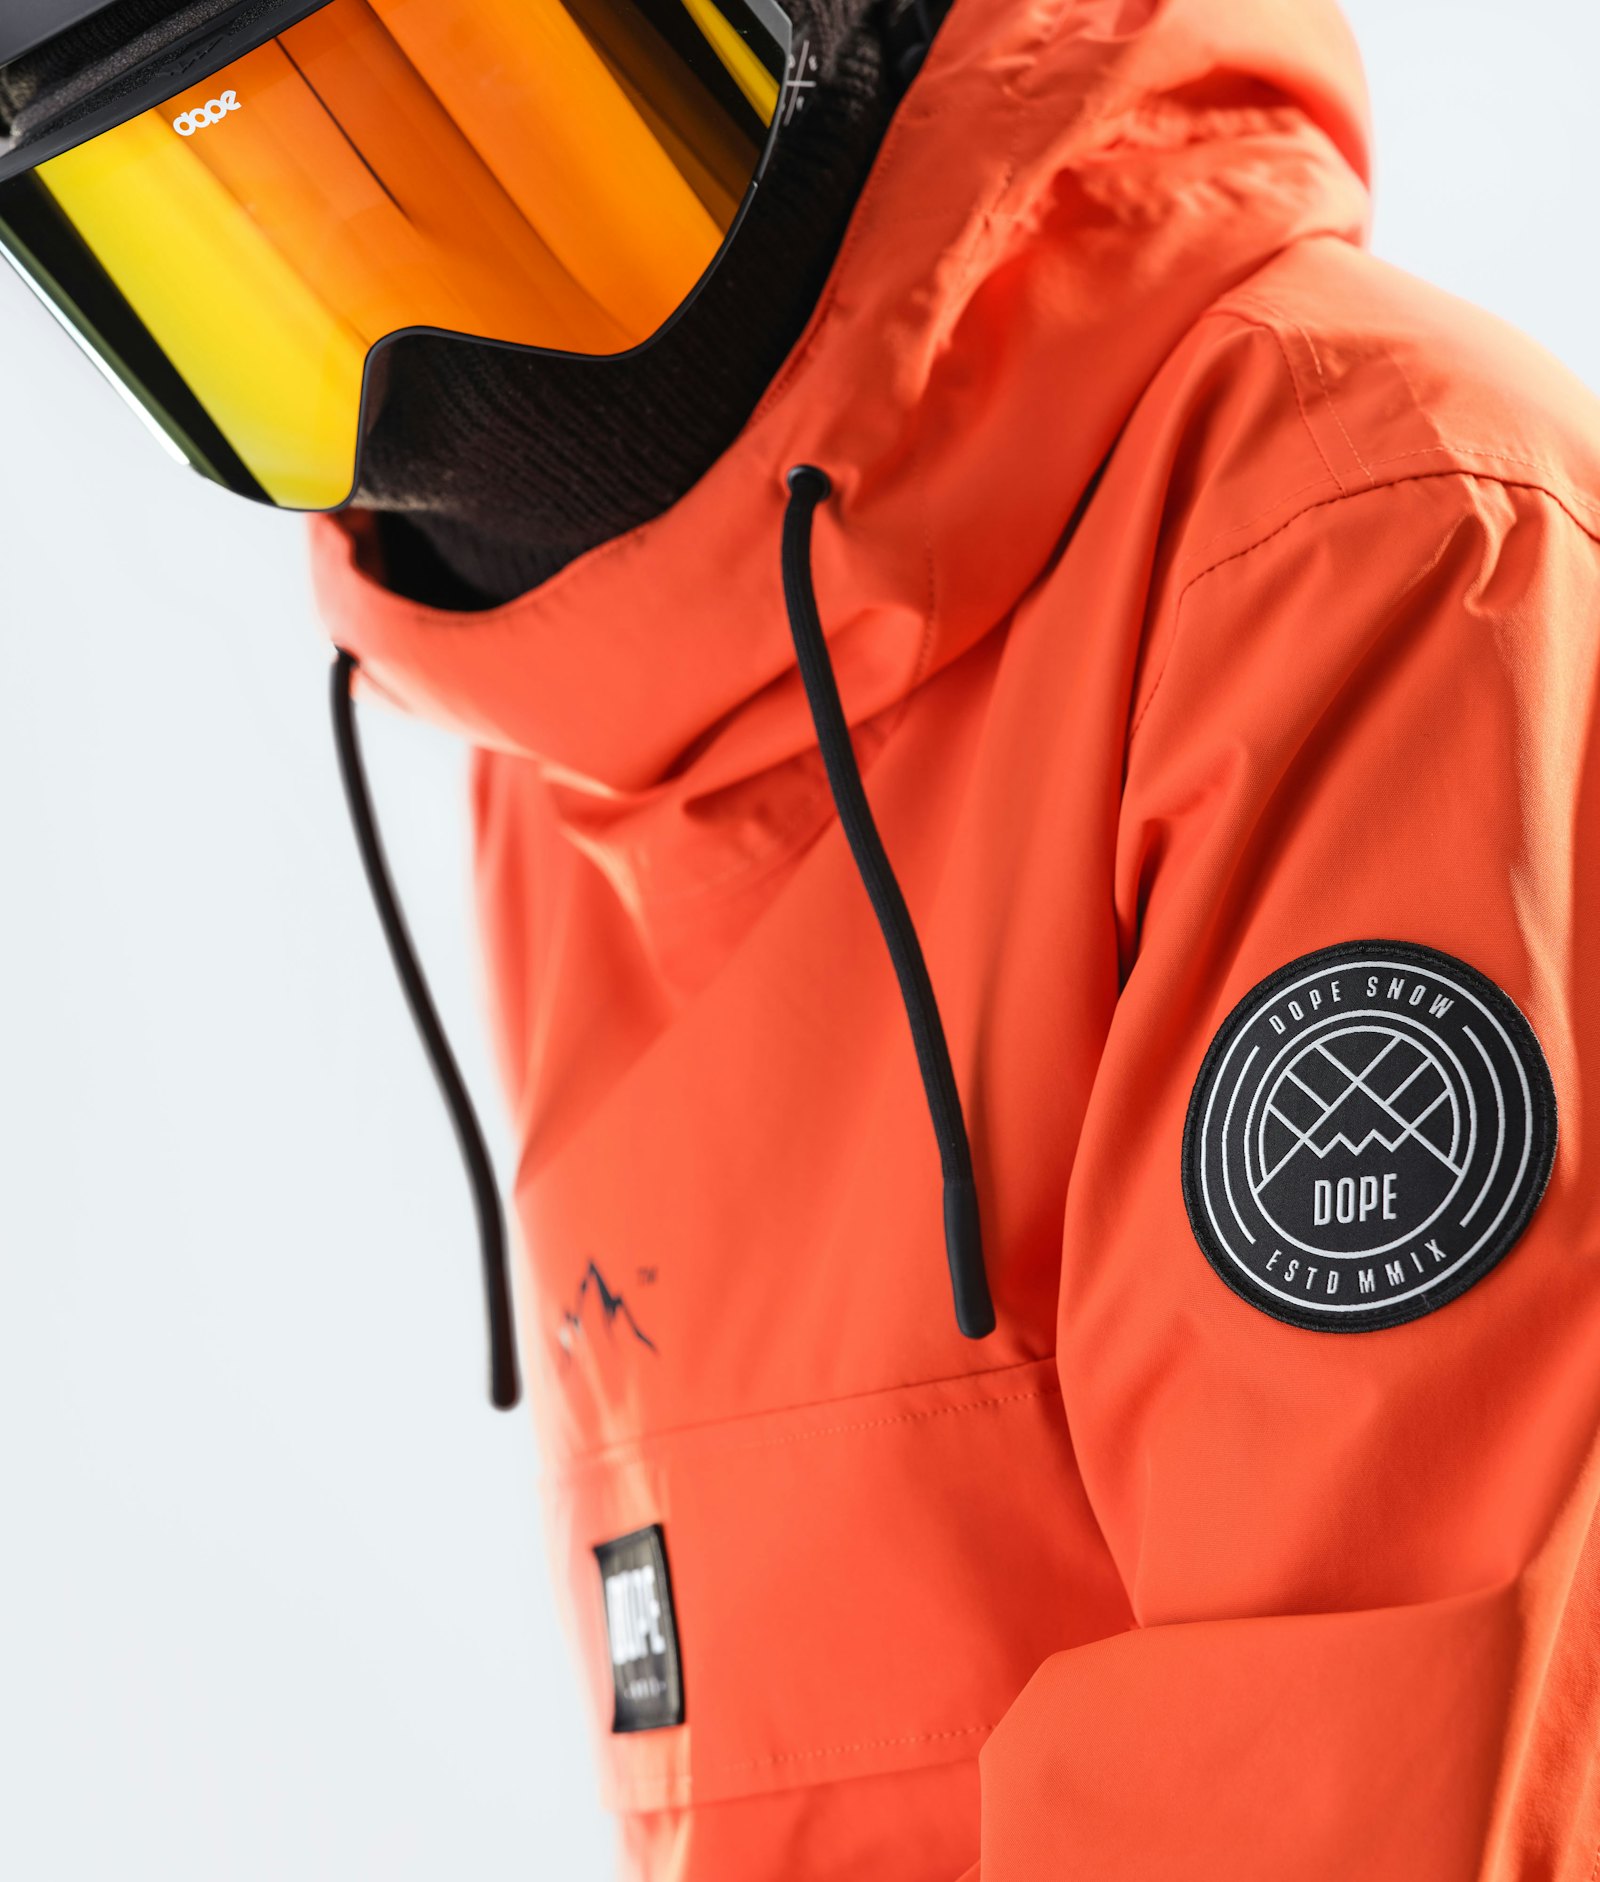 Blizzard 2020 Veste Snowboard Homme Orange